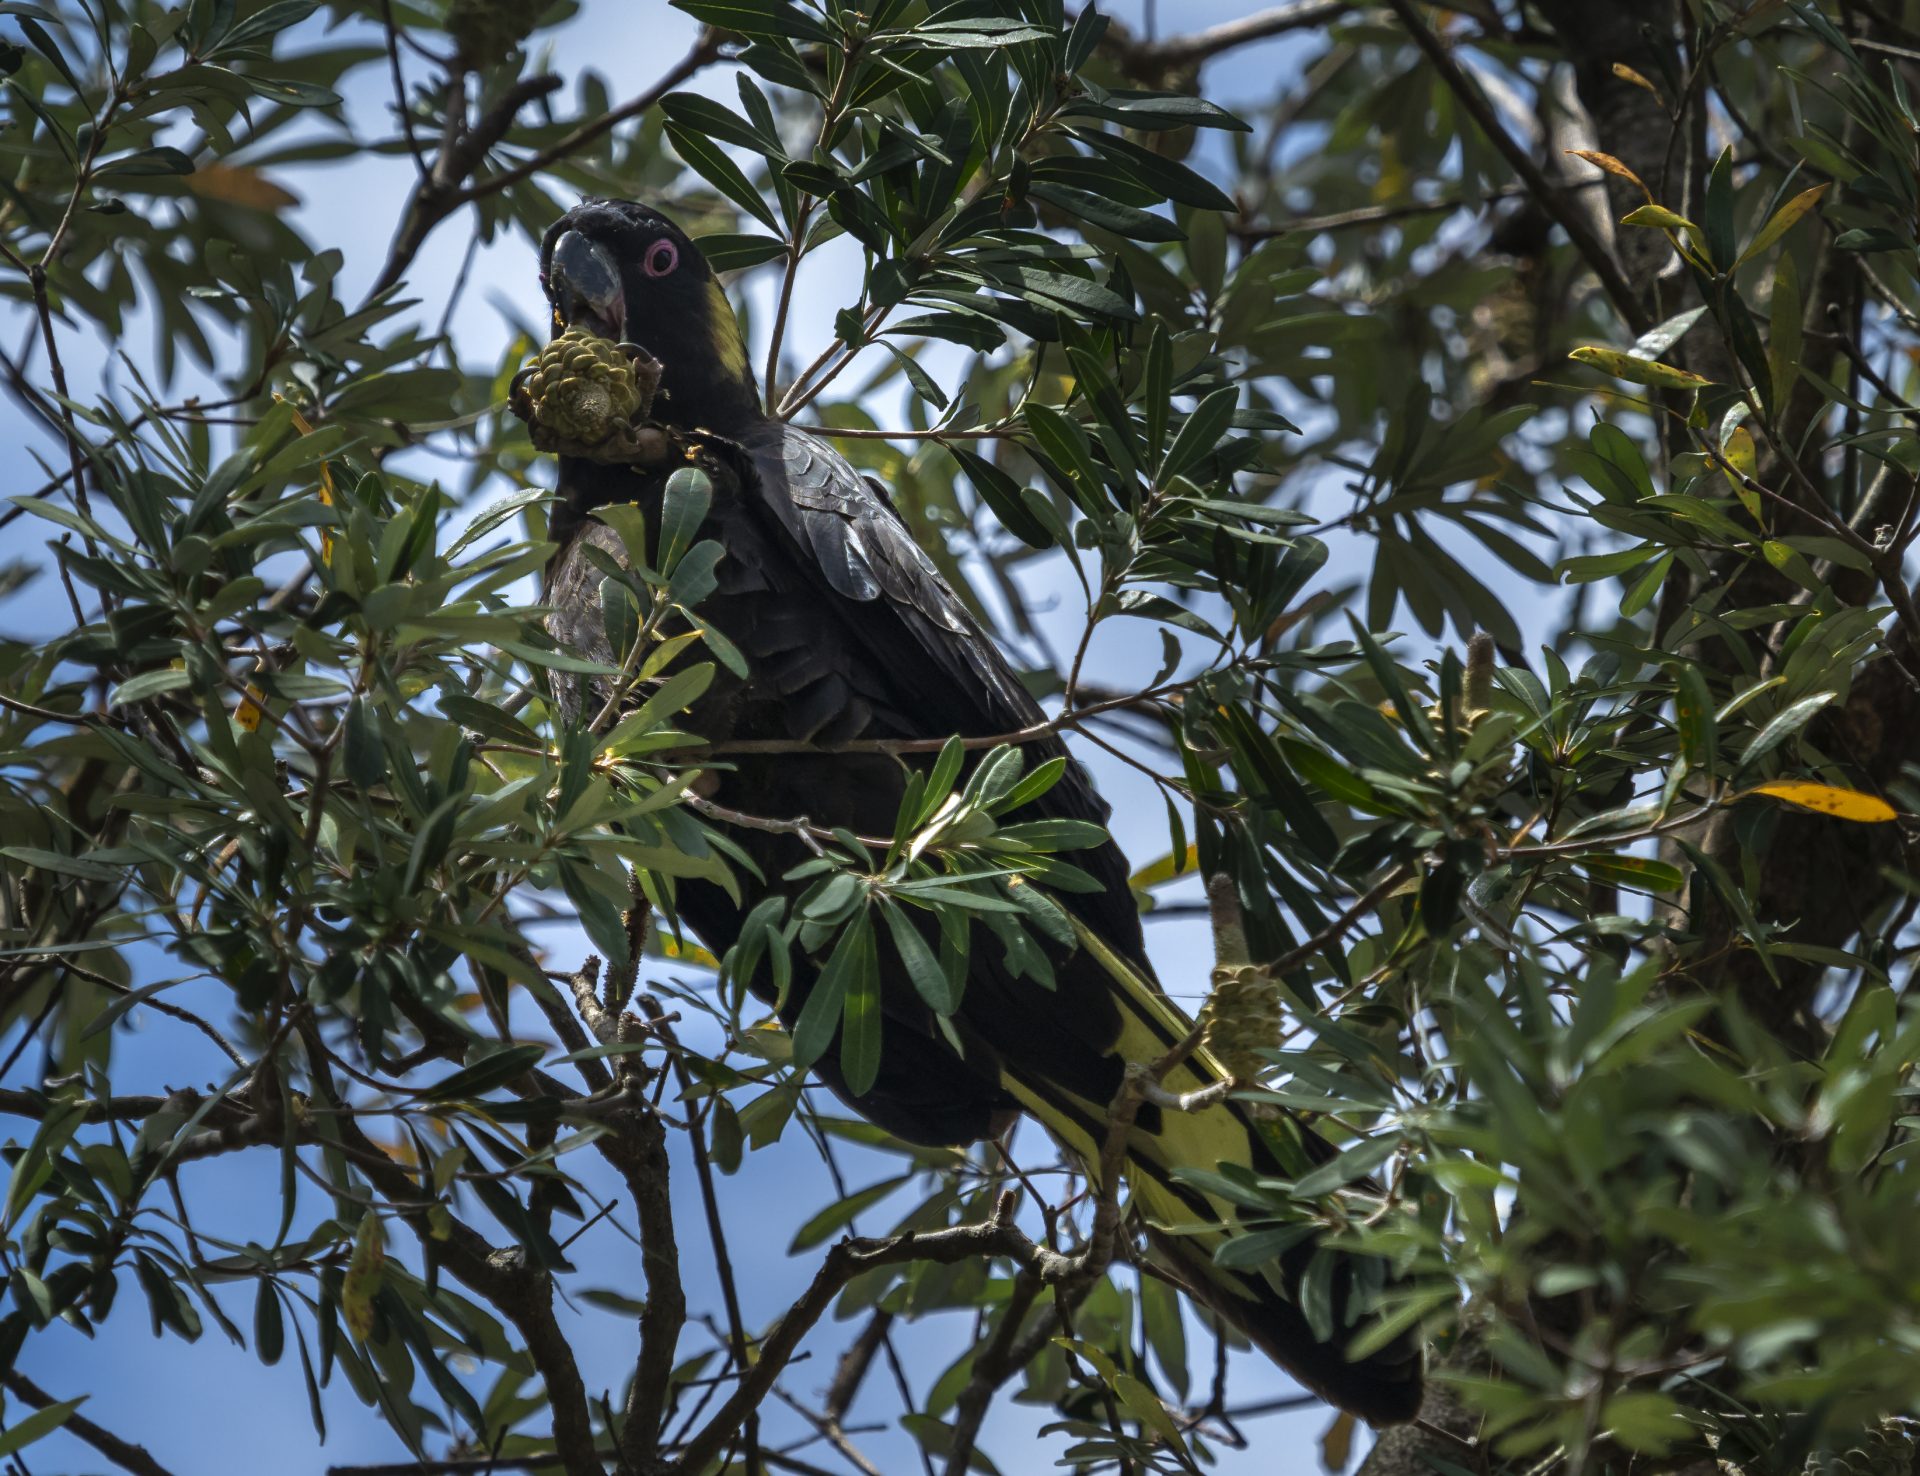 Black cockatoo in Banksia tree